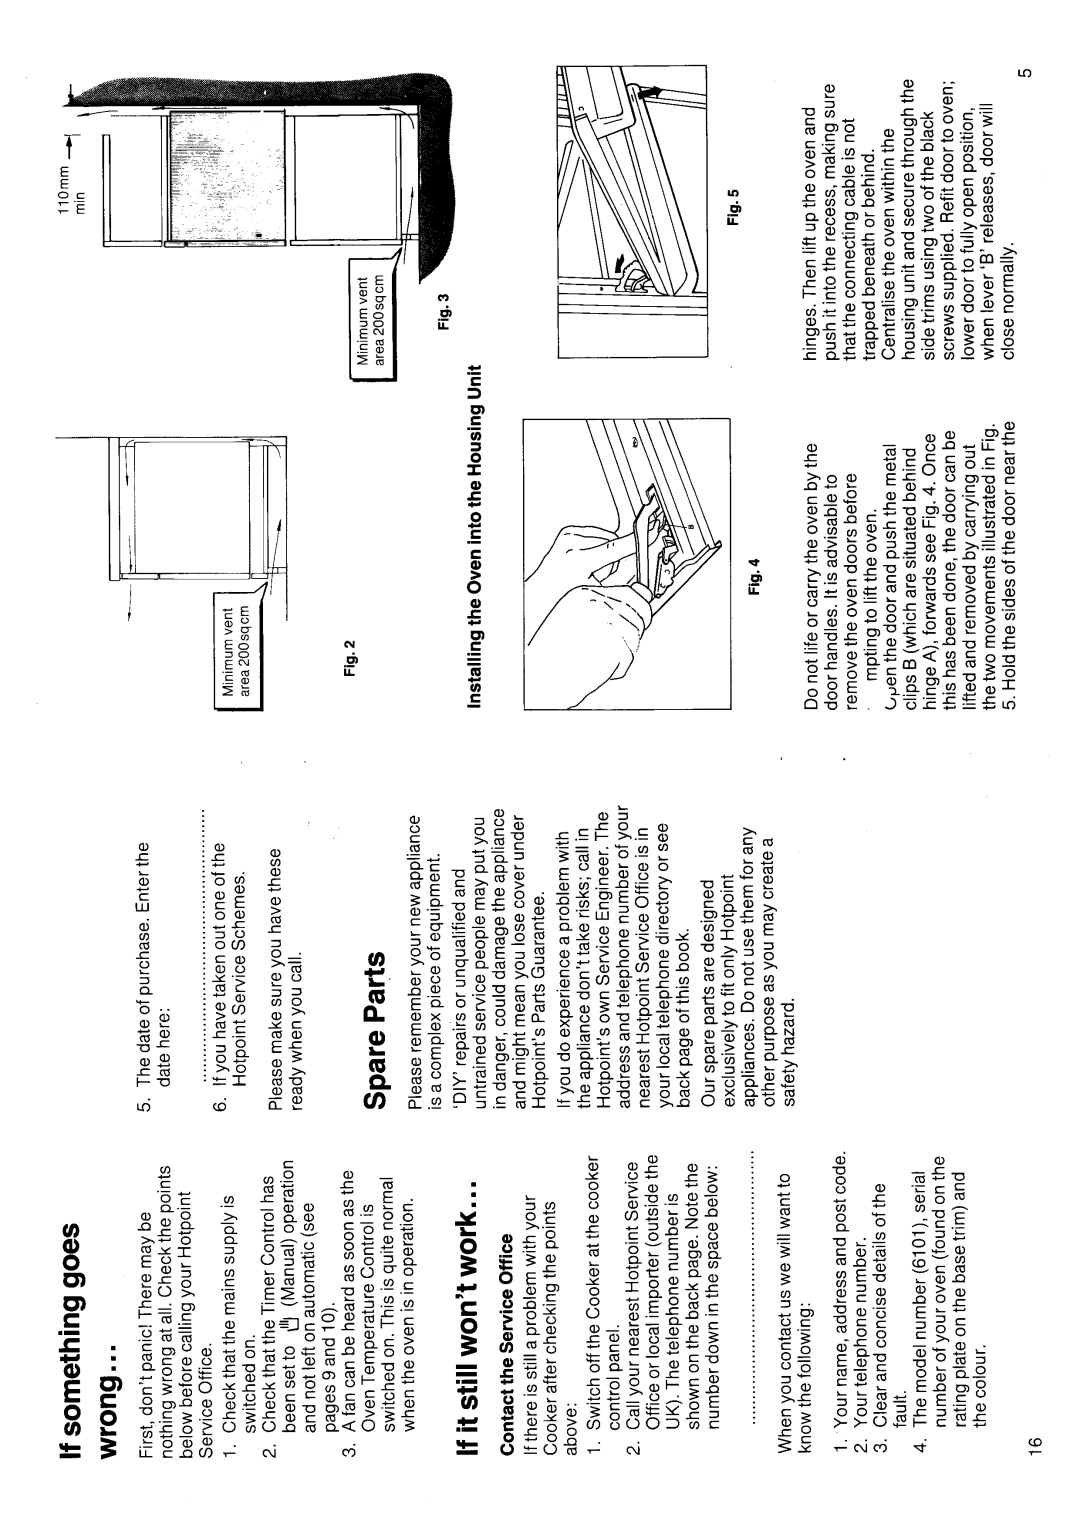 Hotpoint 6101 manual 